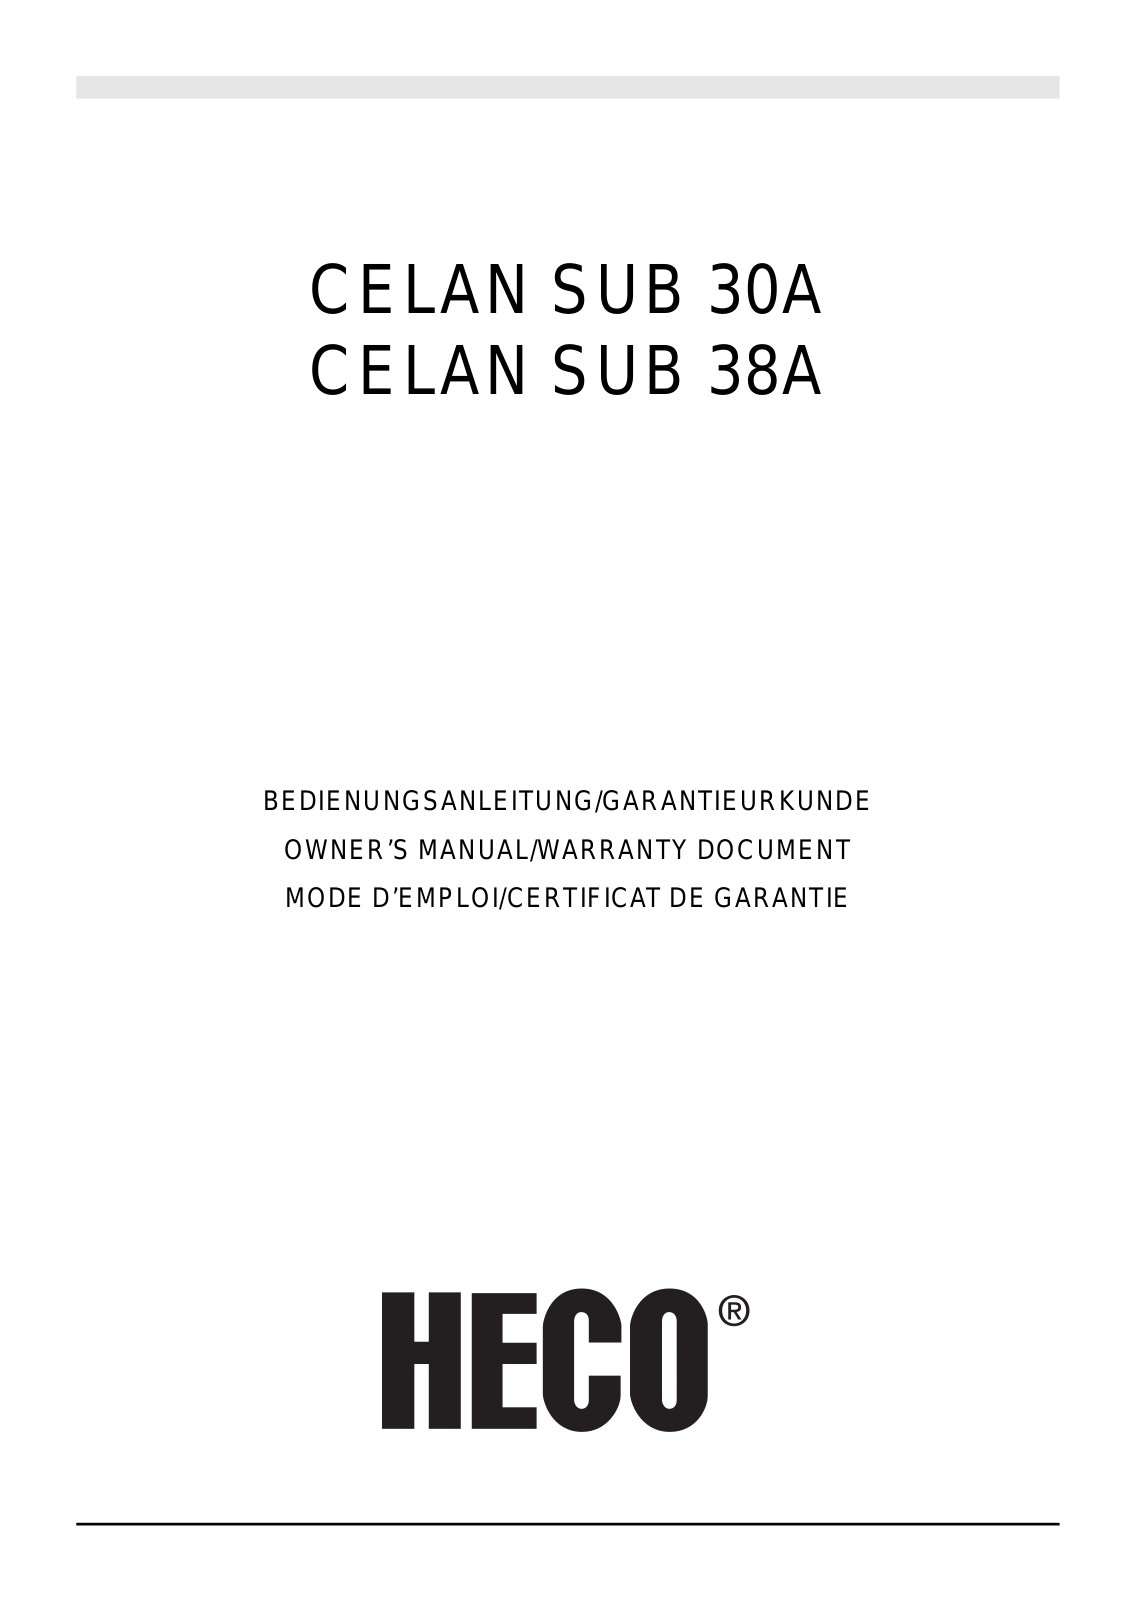 HECO CELAN SUB 38A User Manual